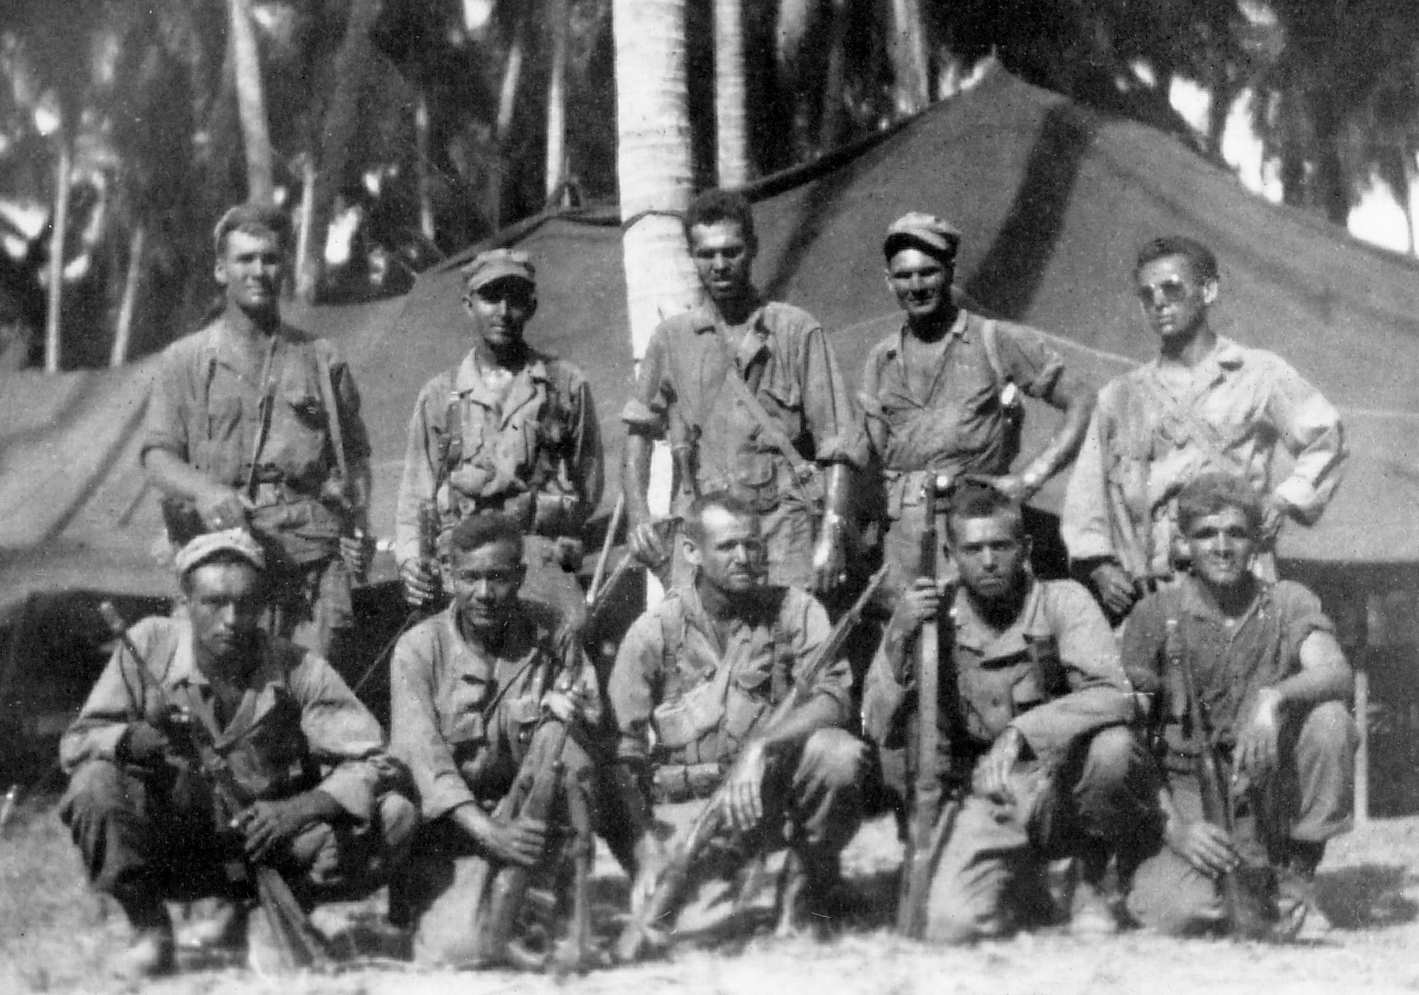 US Rangers, Filipino guerillas rescued 500+ American POWs in 'Great